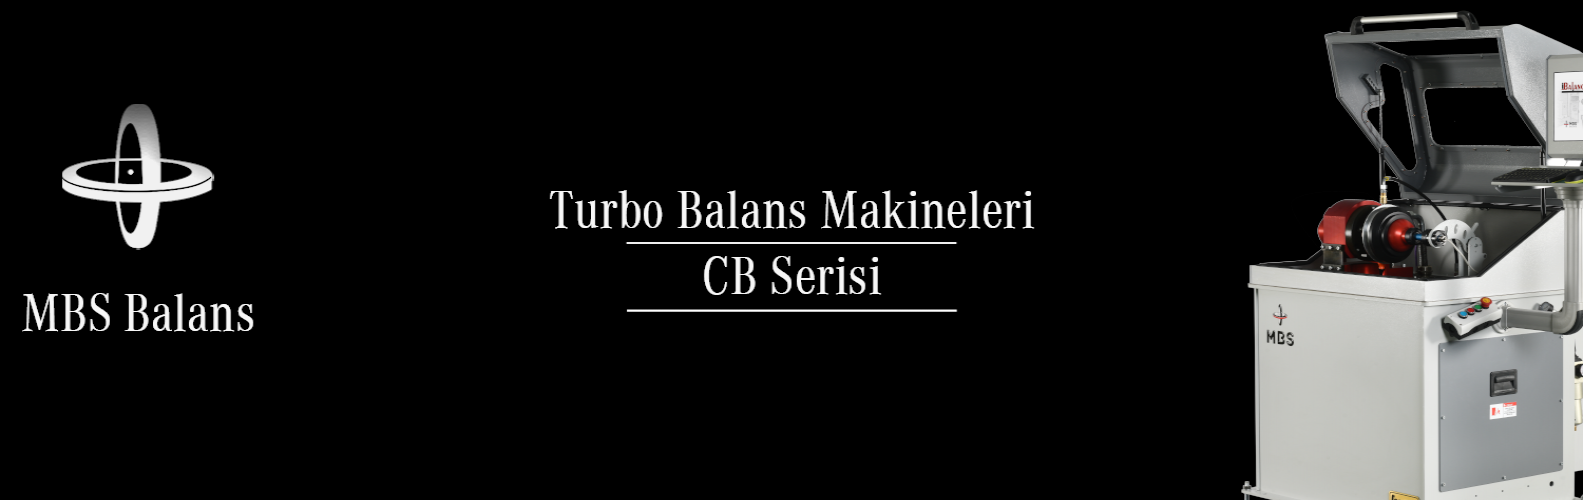 Turbo Balans Makineleri